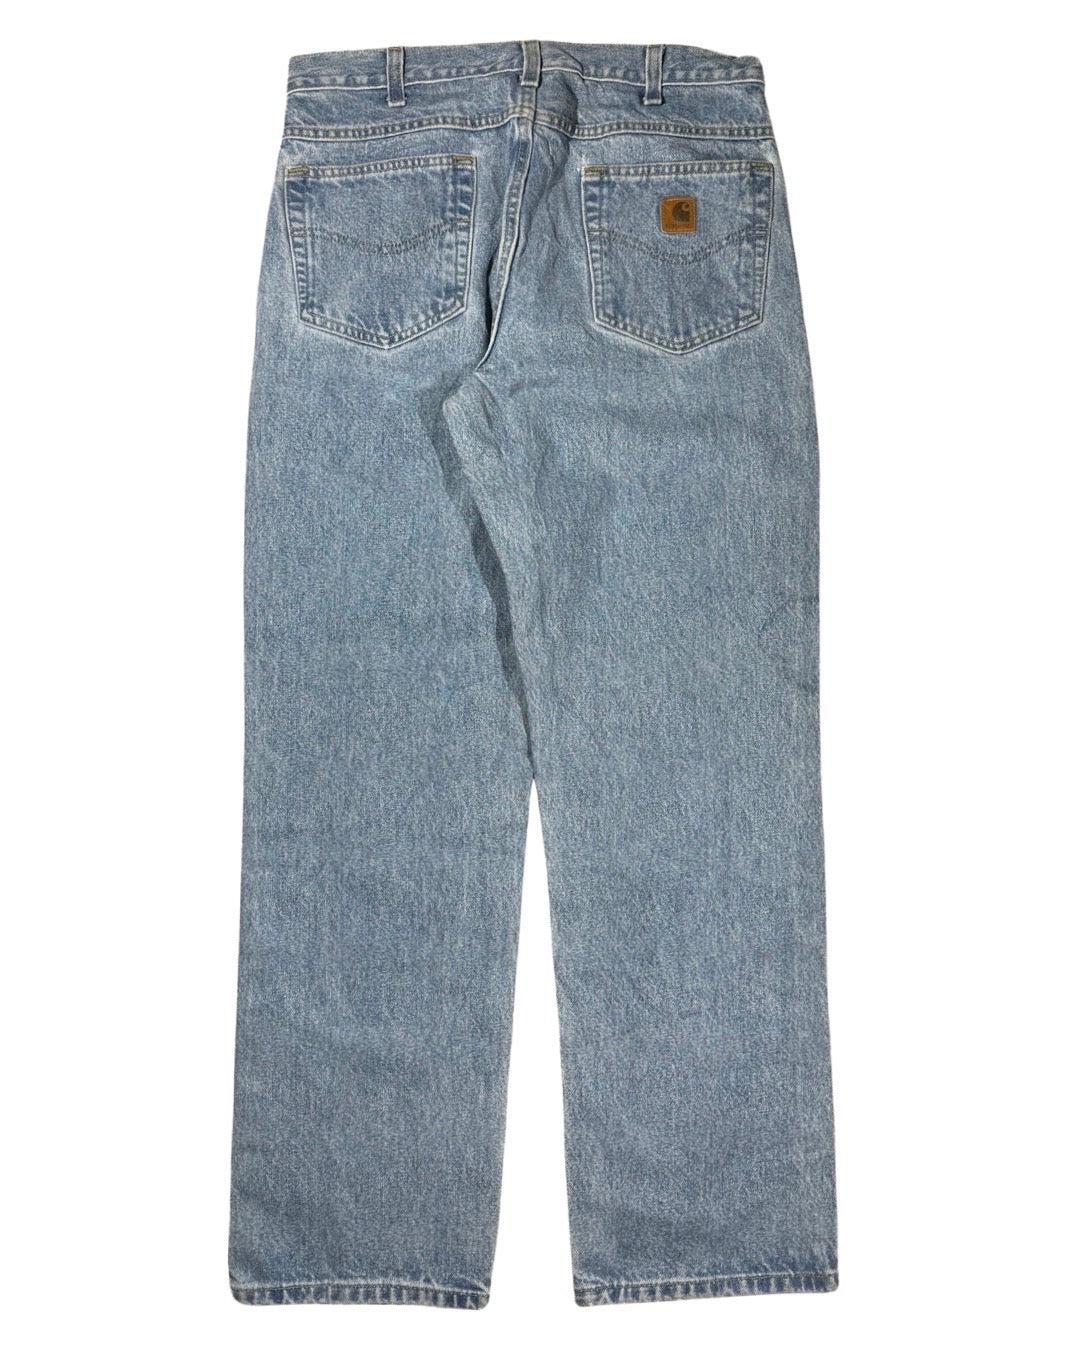 Vintage Carhartt Jeans - 34"